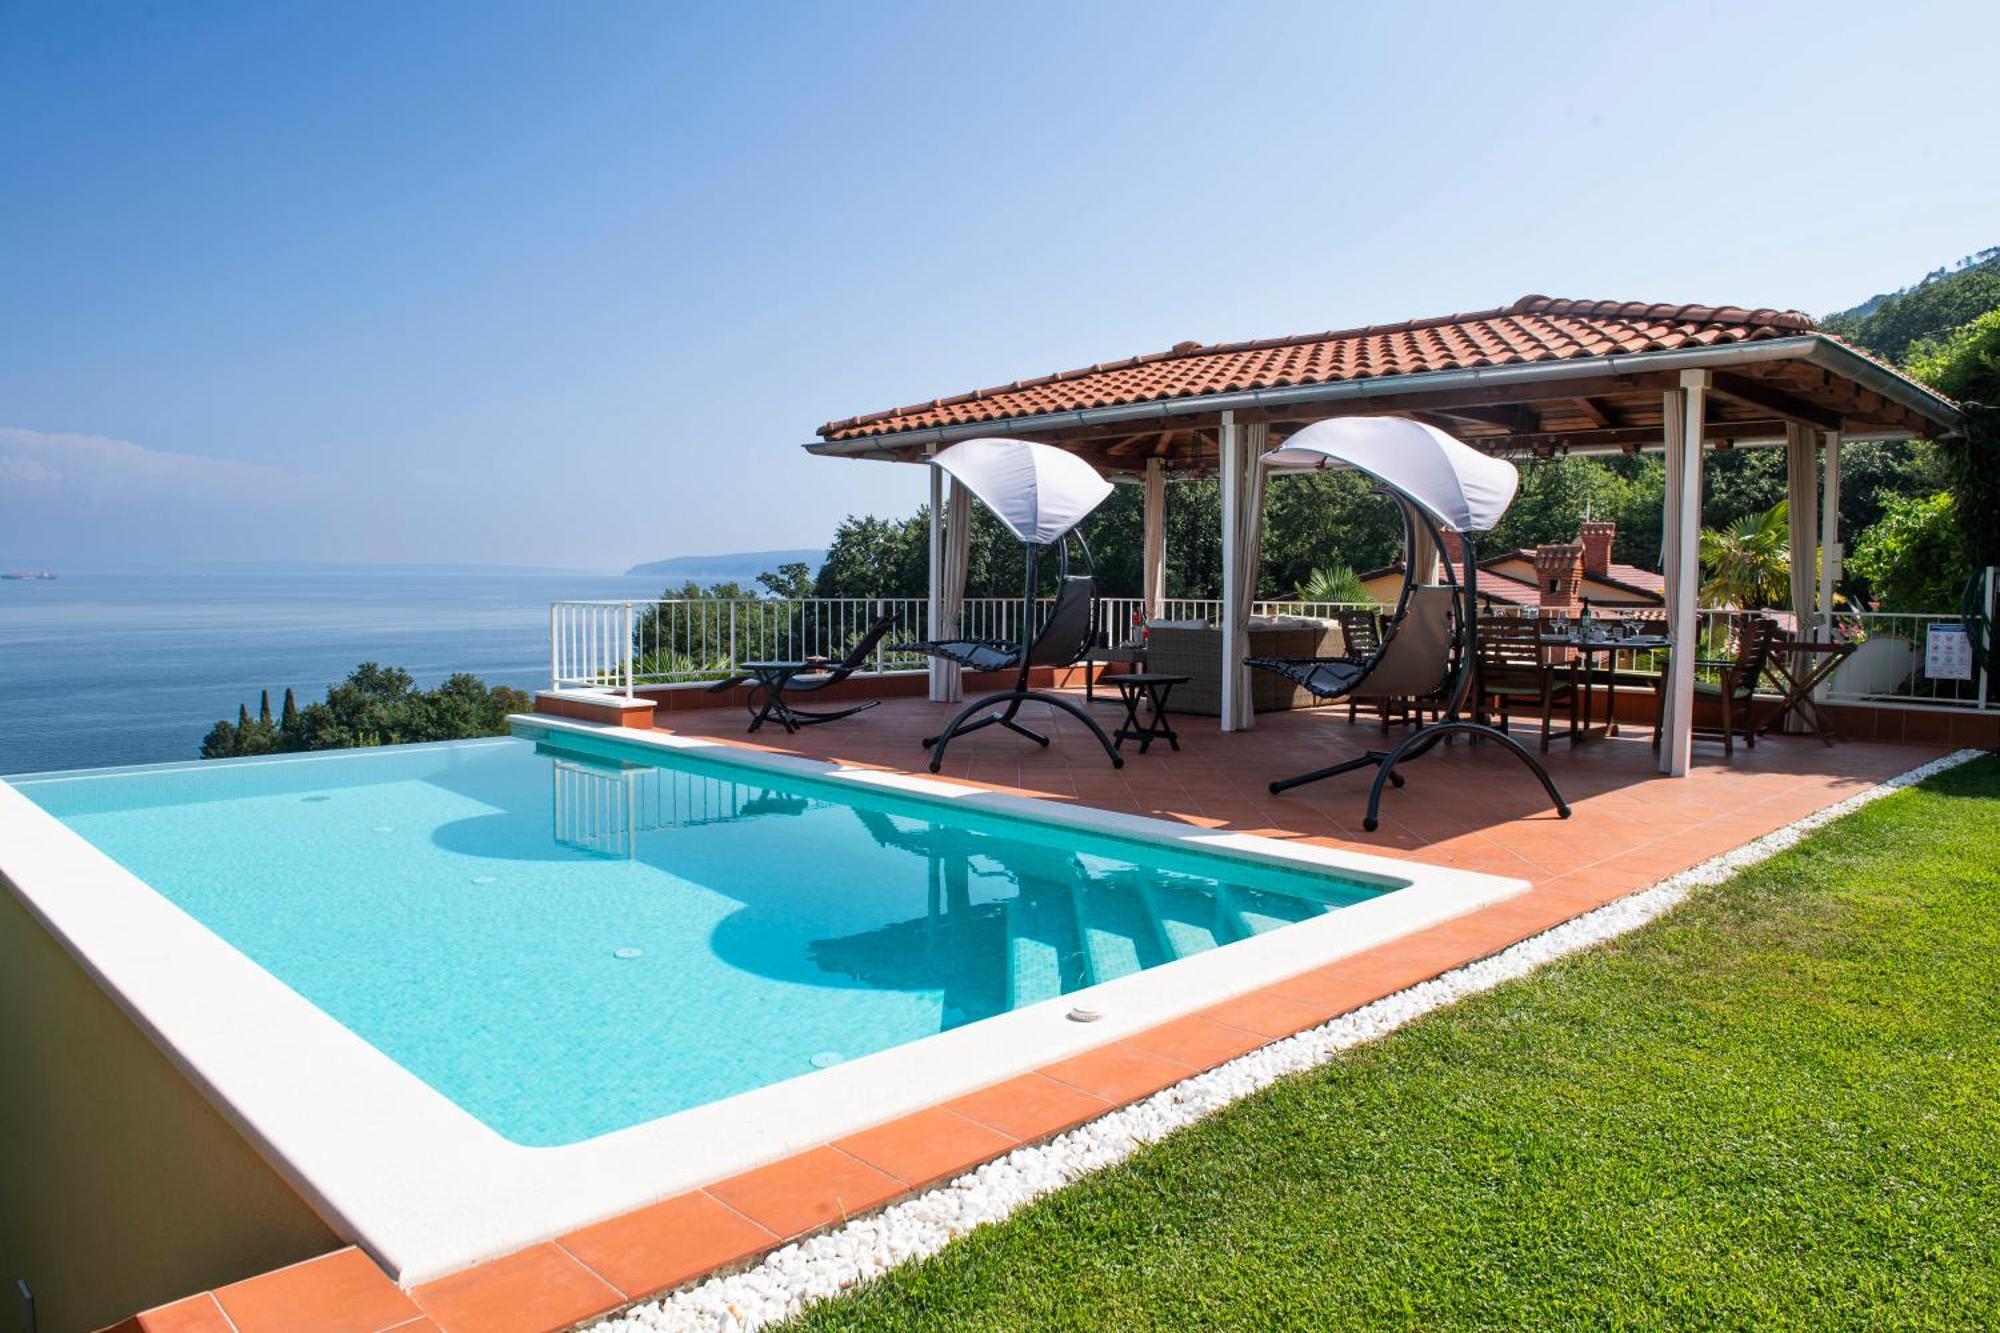 Villa Lovran - 150M To The Beach - Infinity Pool - Incredible Sea View - Fitnessraum 外观 照片